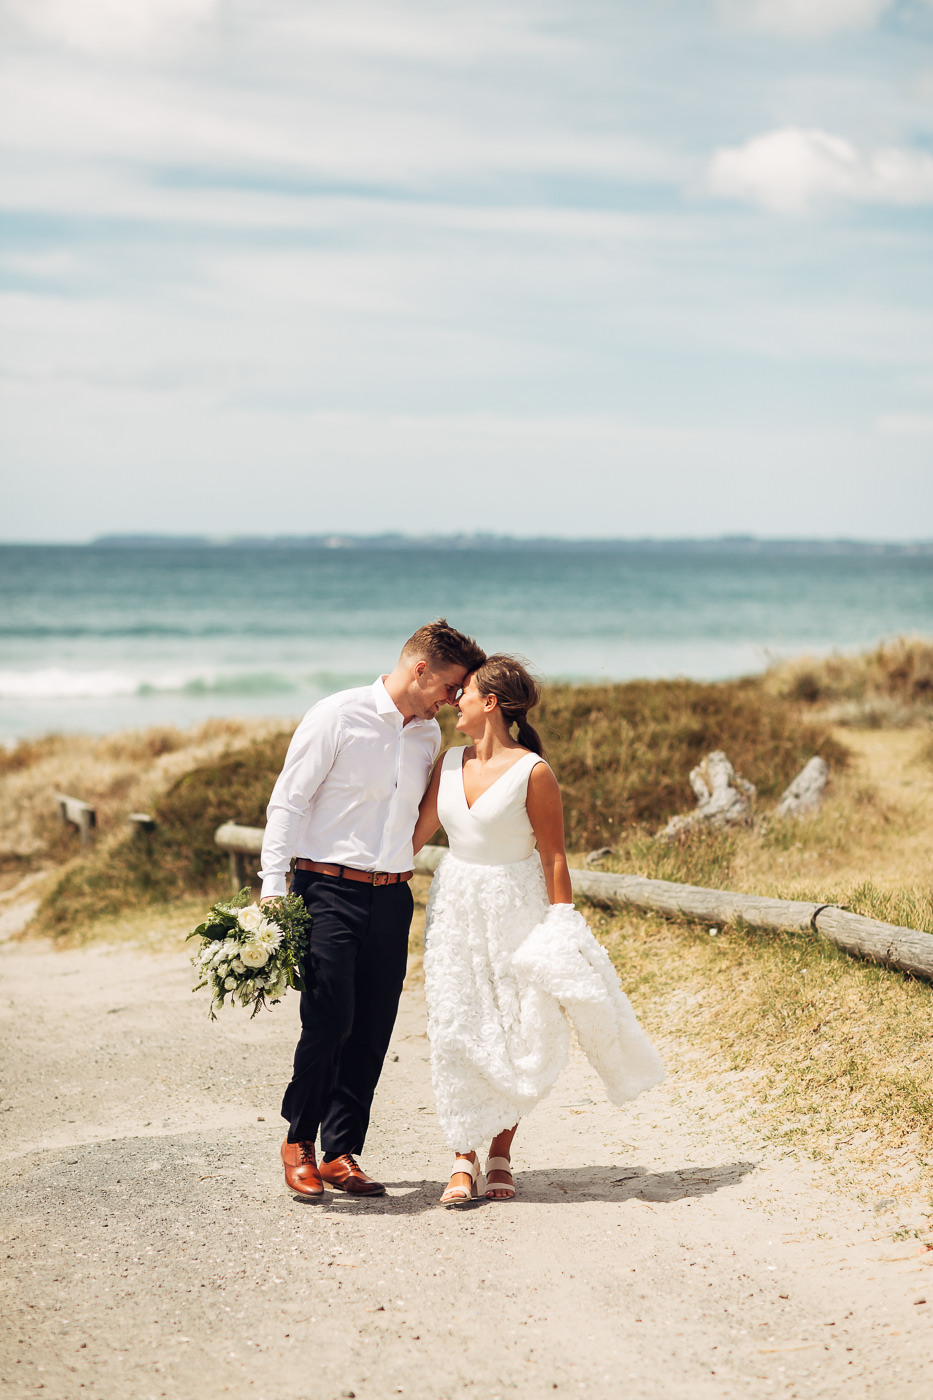 Anne-Hilde & Pieter - januarbryllup i slående vakre Tauranga, New Zealand Bryllupsfotograf New Zealand strand 10 Sommerbryllup